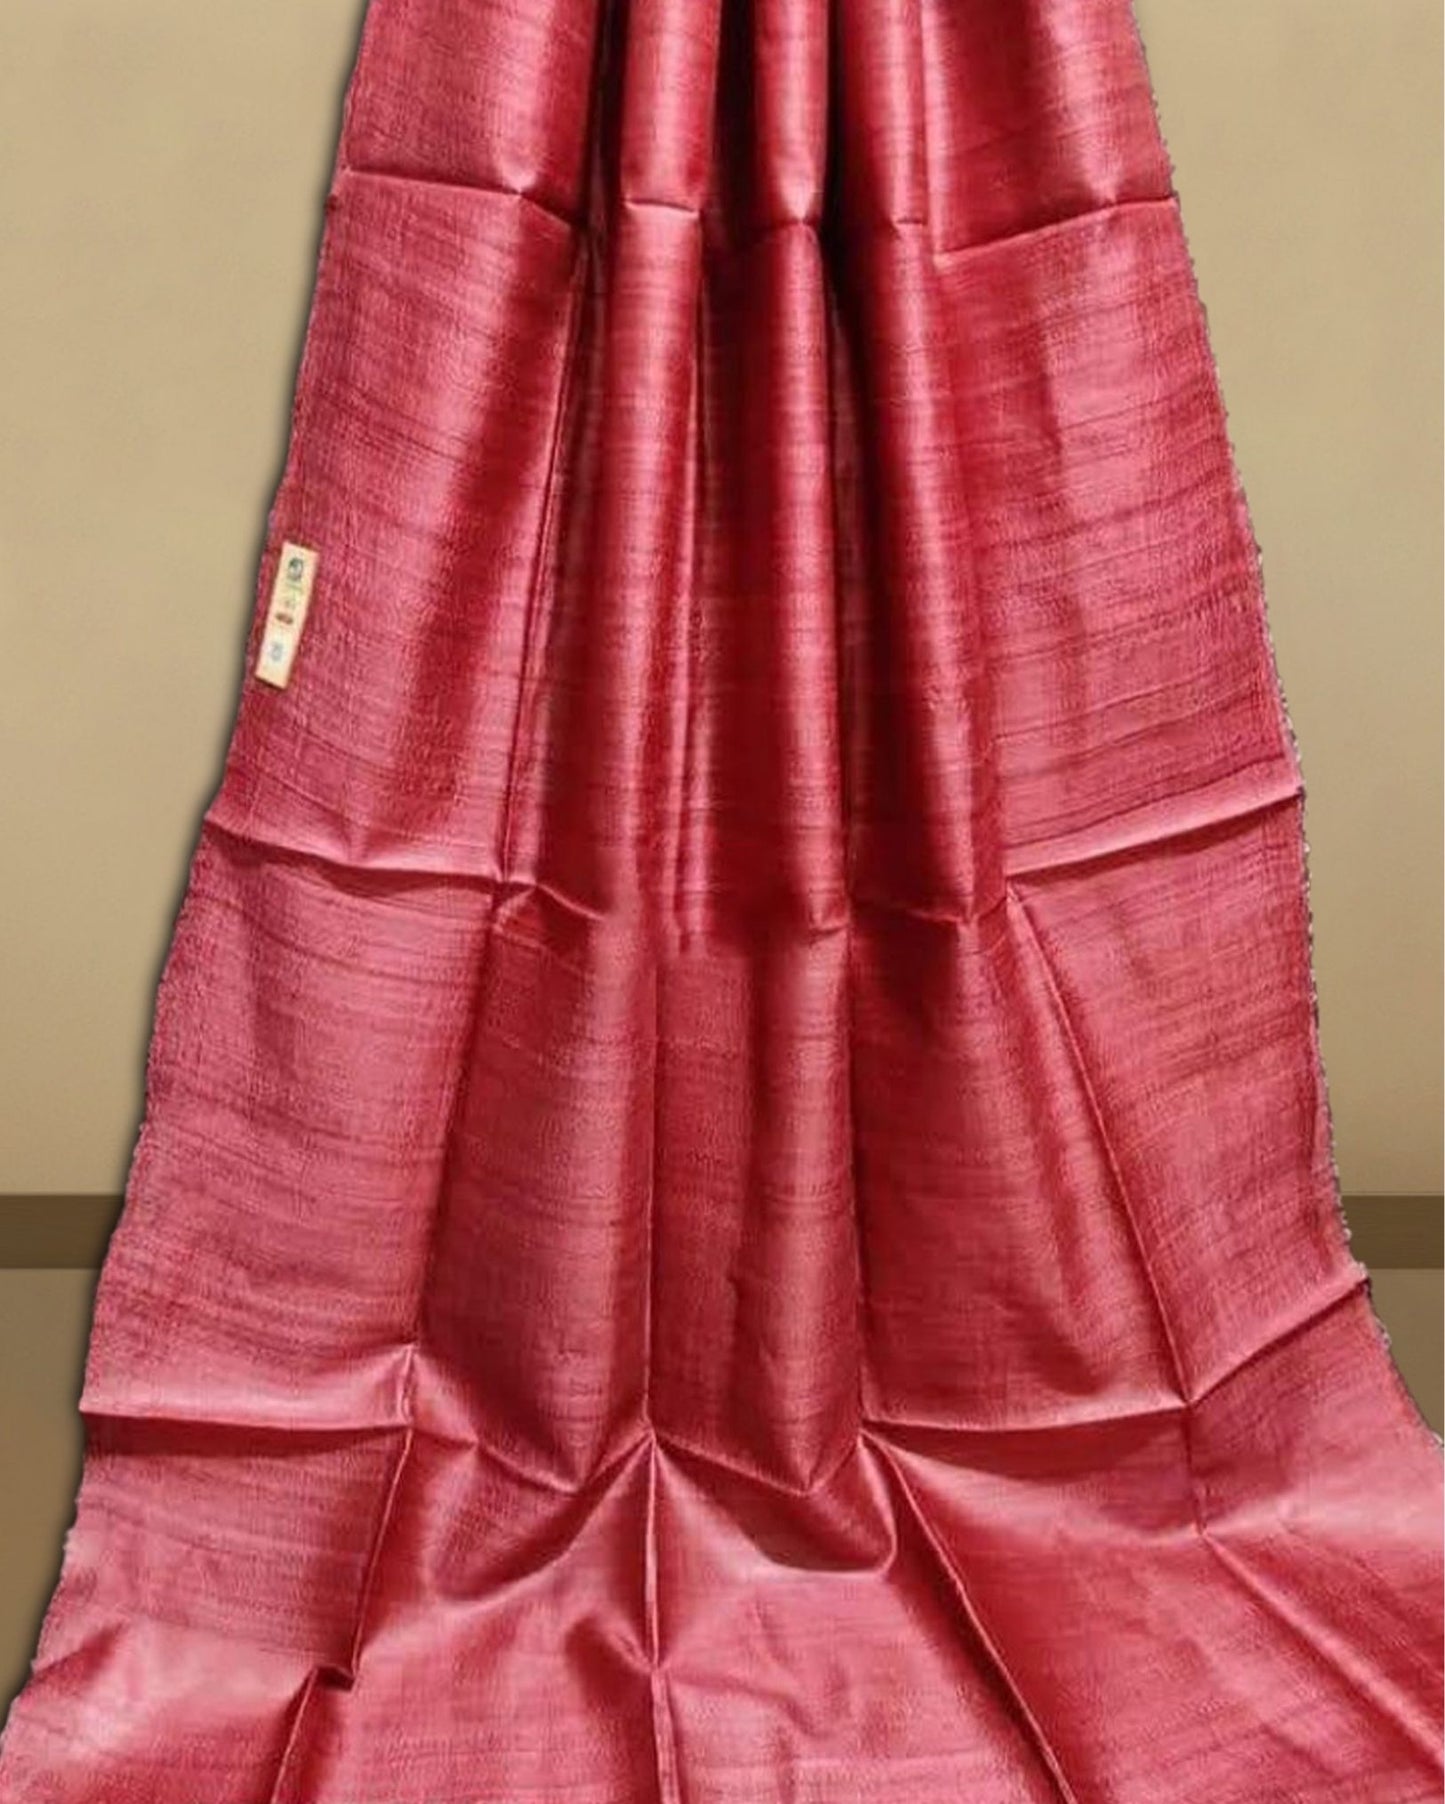 Silkmark Certified Ghicha Tussar Exquisite Red Saree